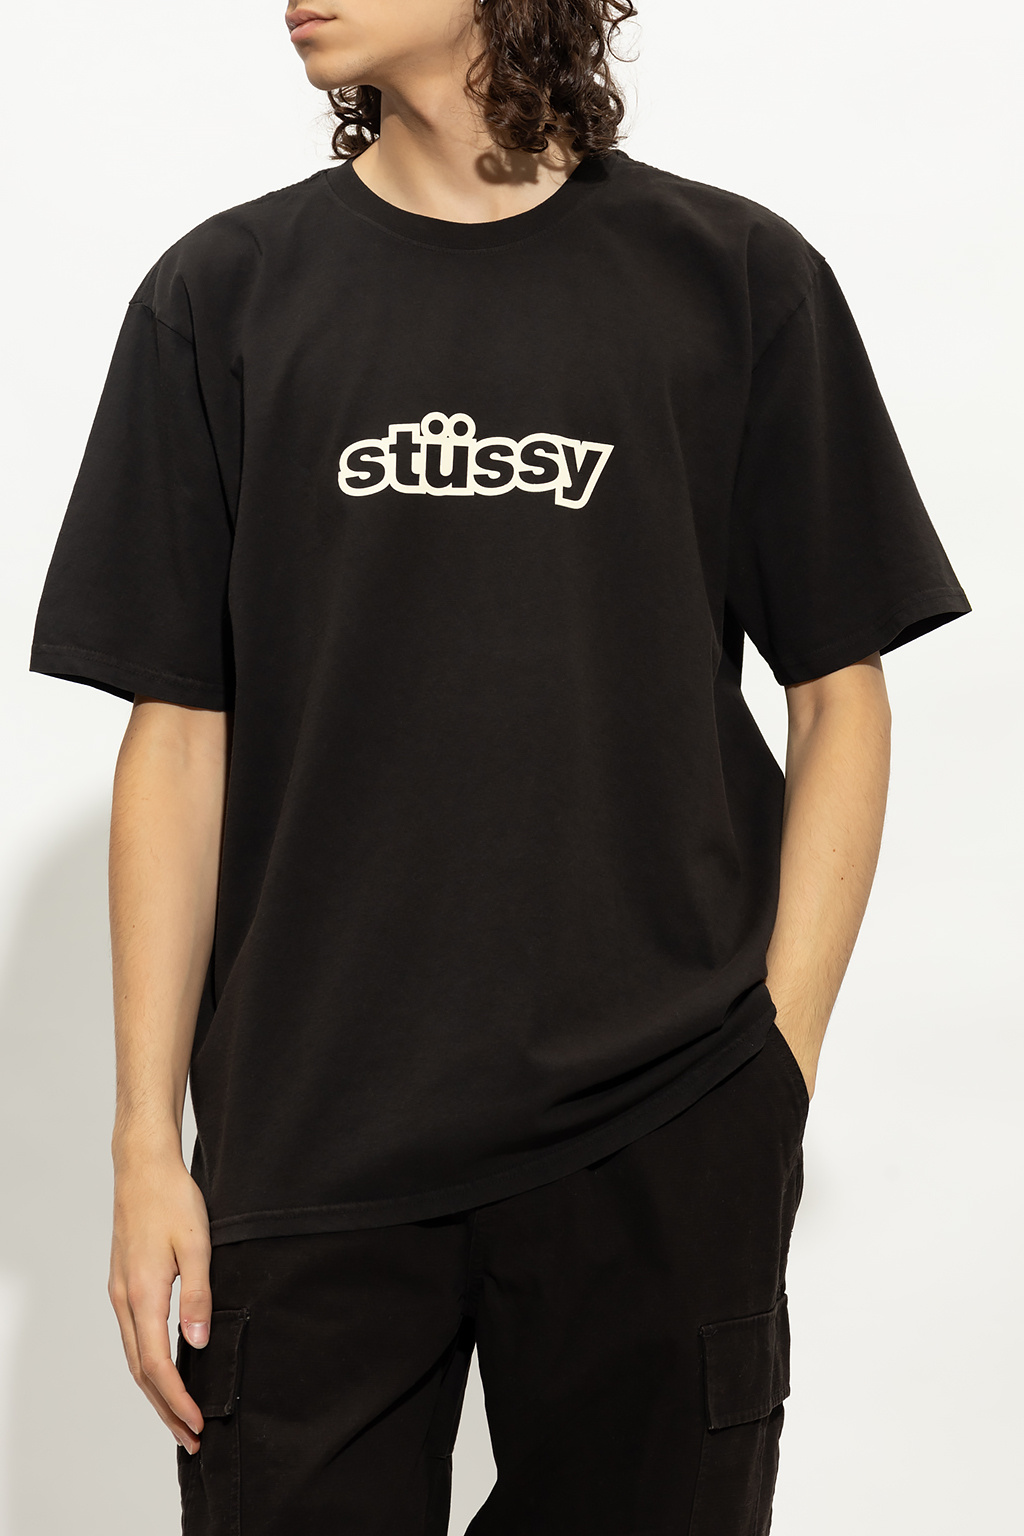 Stussy T-shirt rmeln with logo